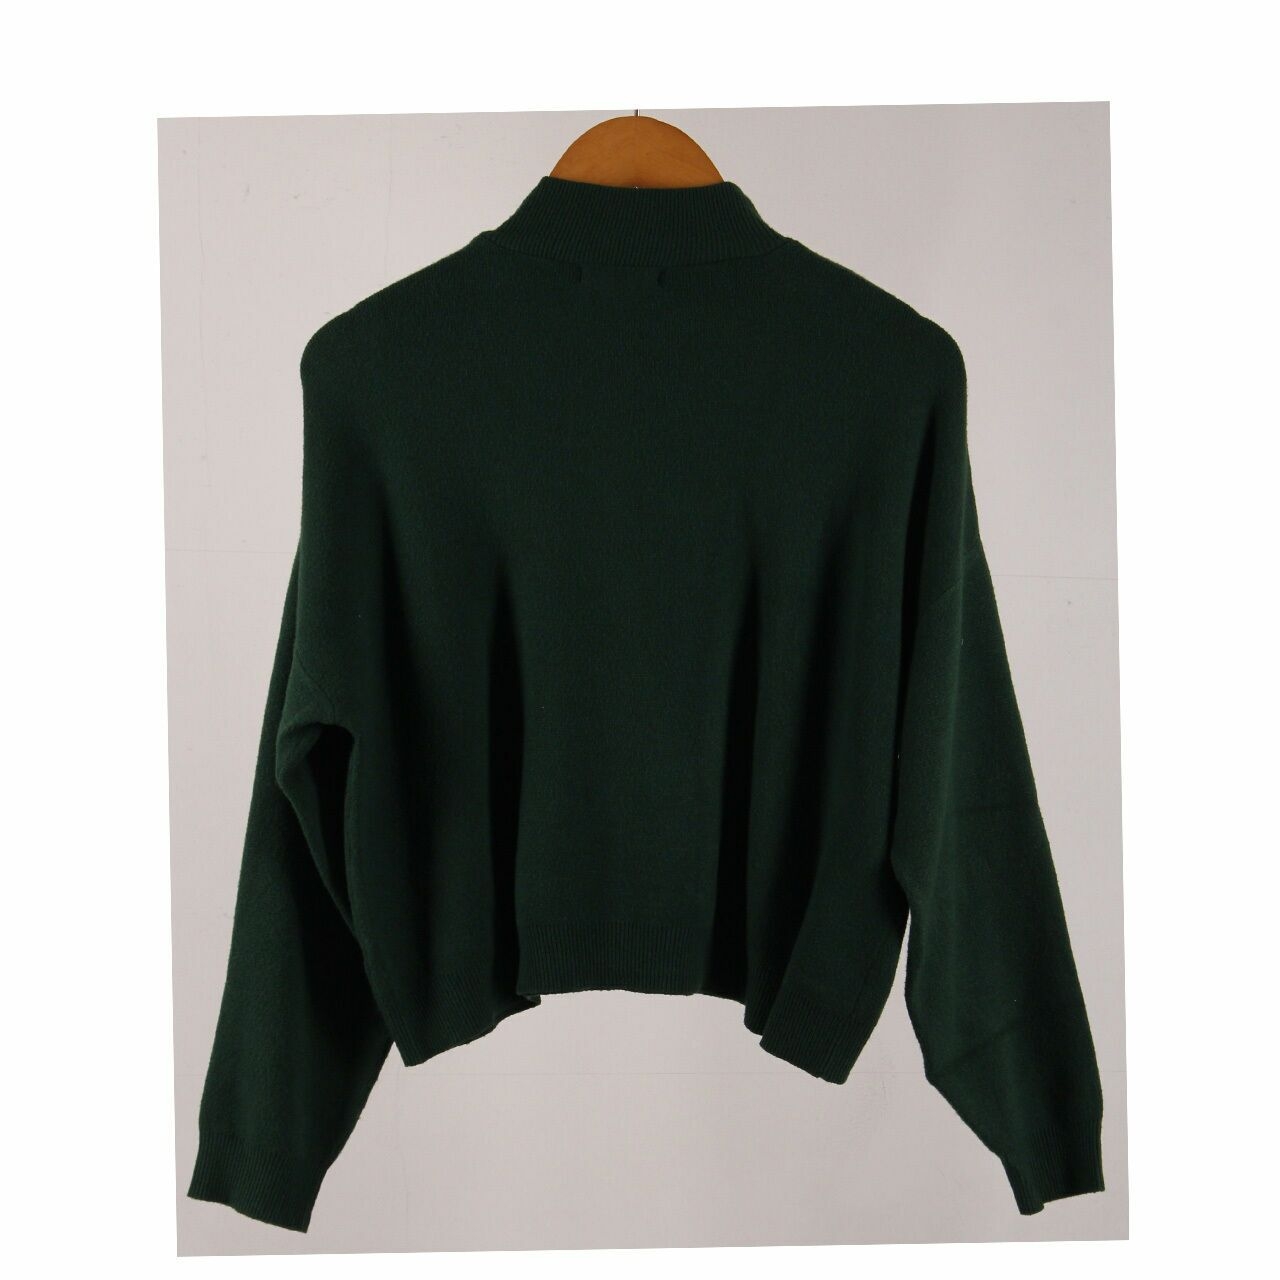 Stradivarius Green Half Zip Sweater